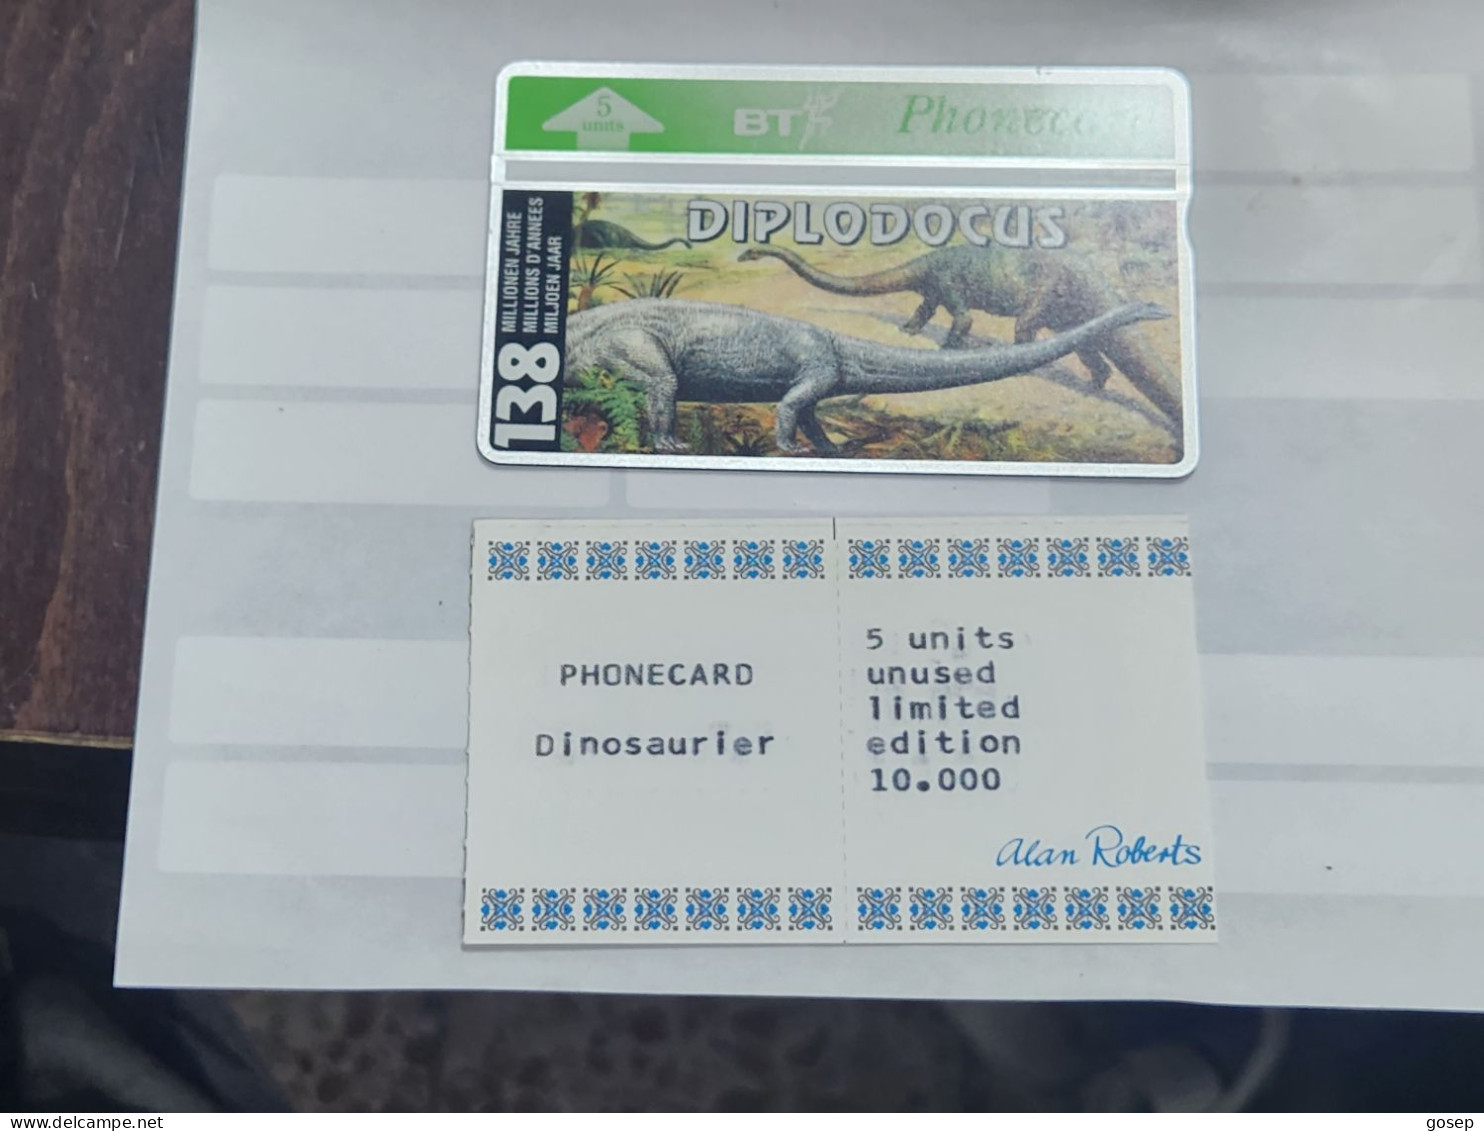 United Kingdom-(BTO-070)-Dinosaur Series-(J)Dilpodocus-(91)(5units)(402E08610)price Cataloge MINT-12.00£-1card Prepiad - BT Emissioni Straniere